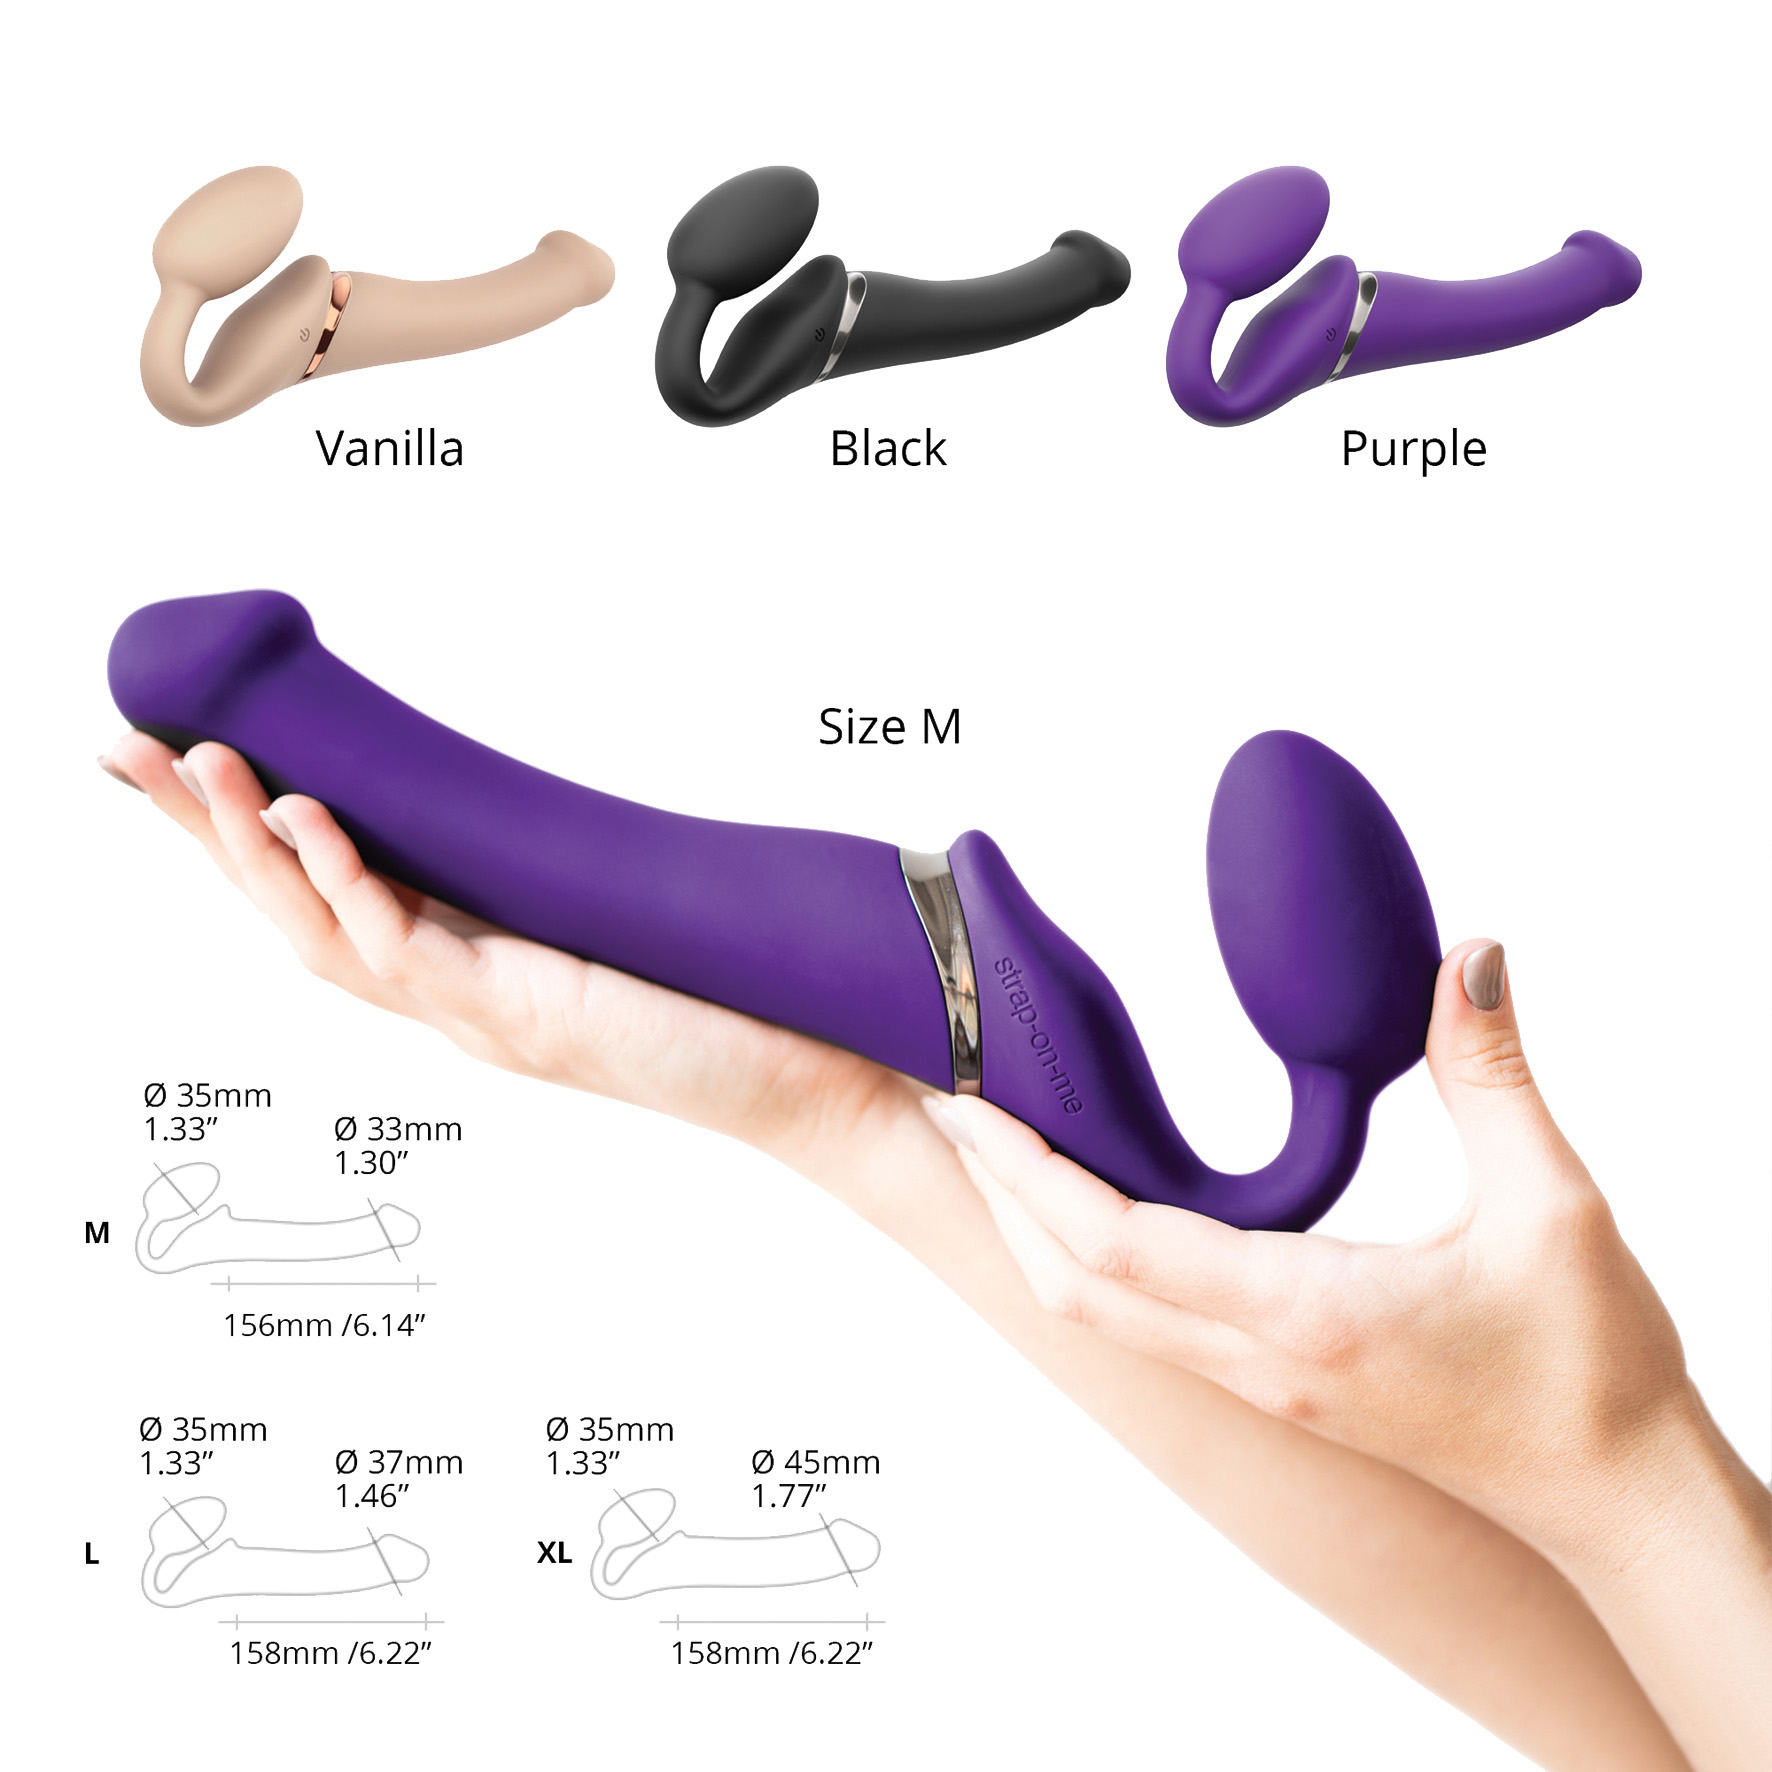 Strap-on-me Vibrating bendable strap-on purple M